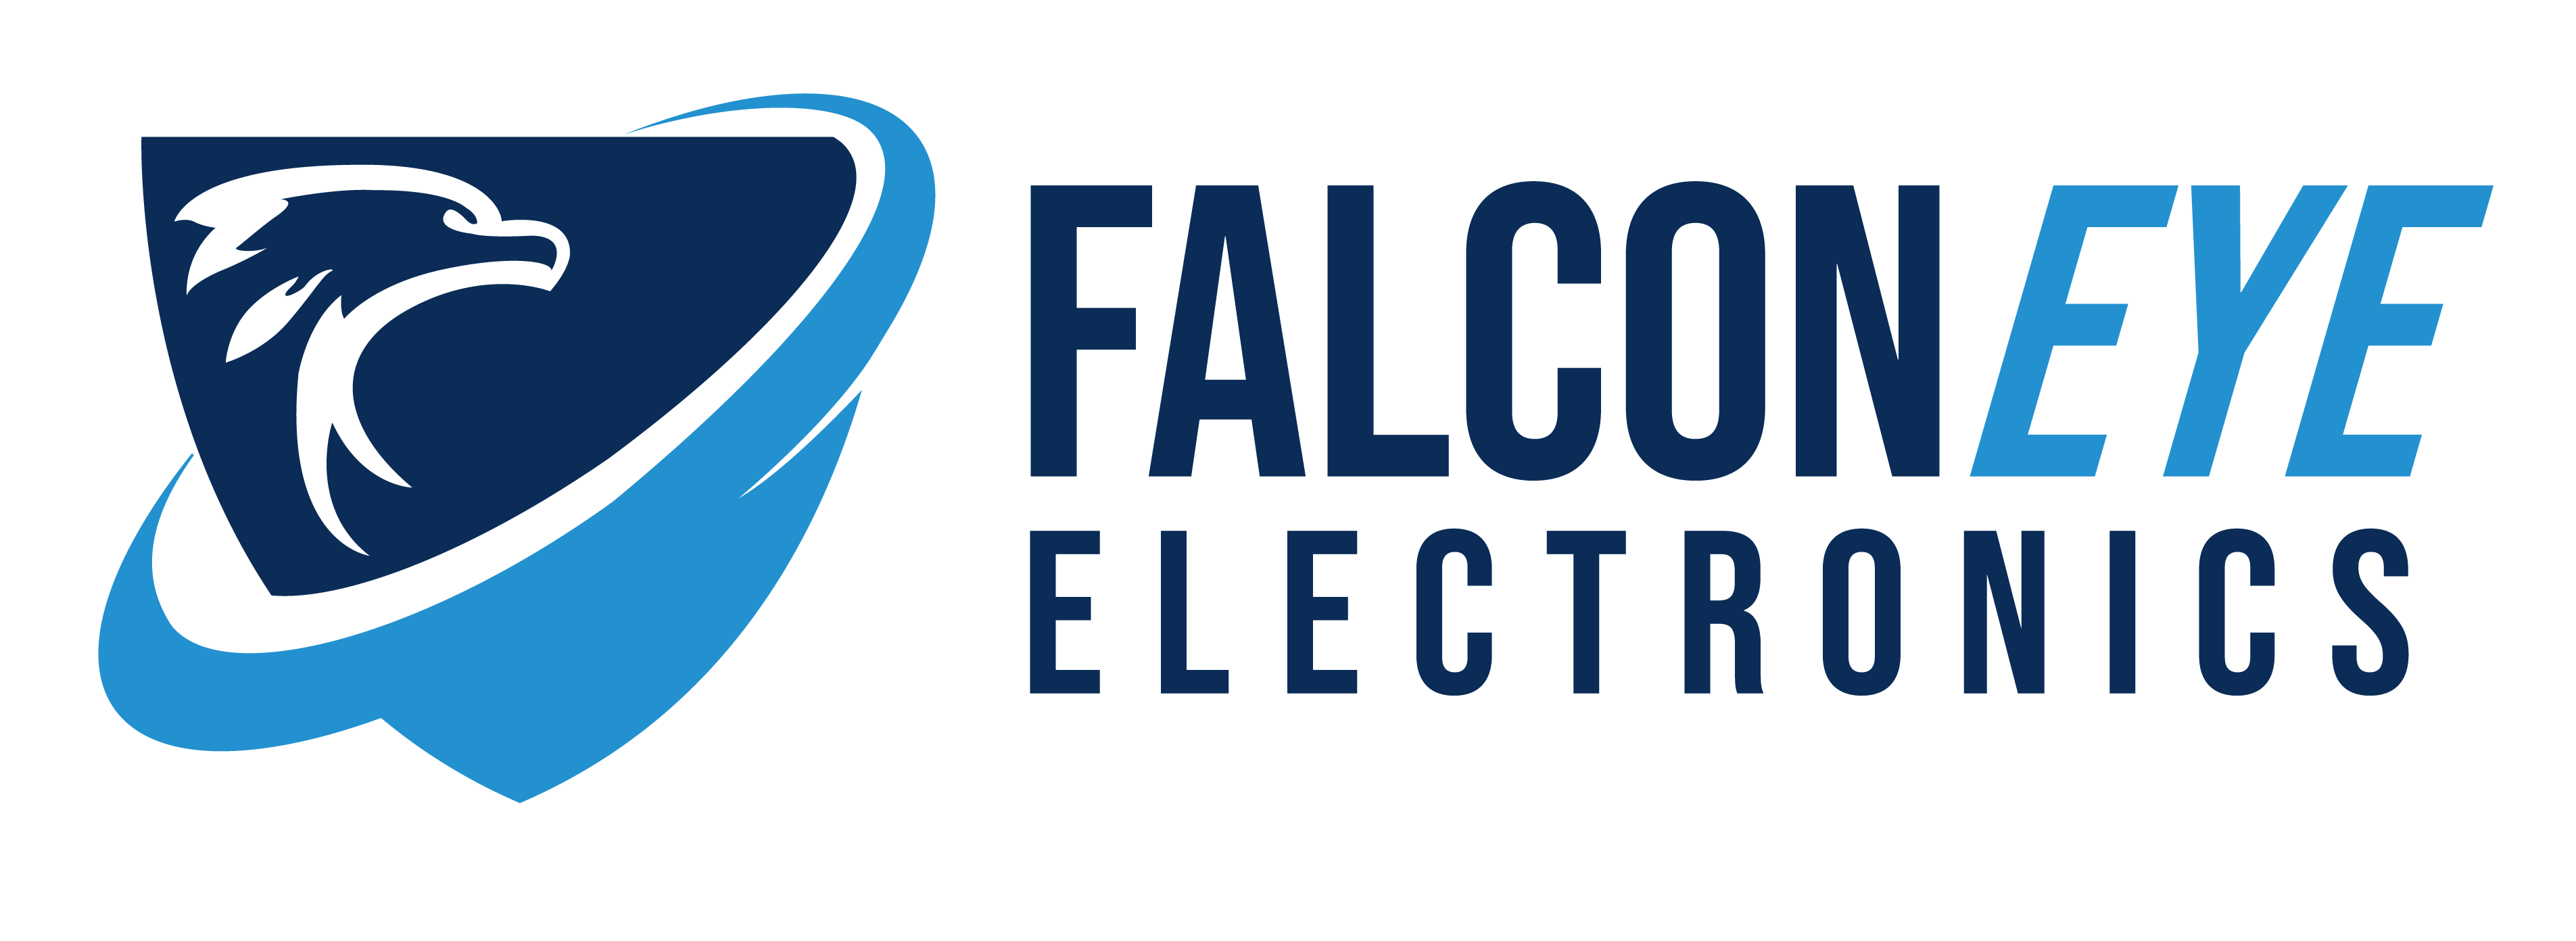 FalconEye Electronics Coupon Codes